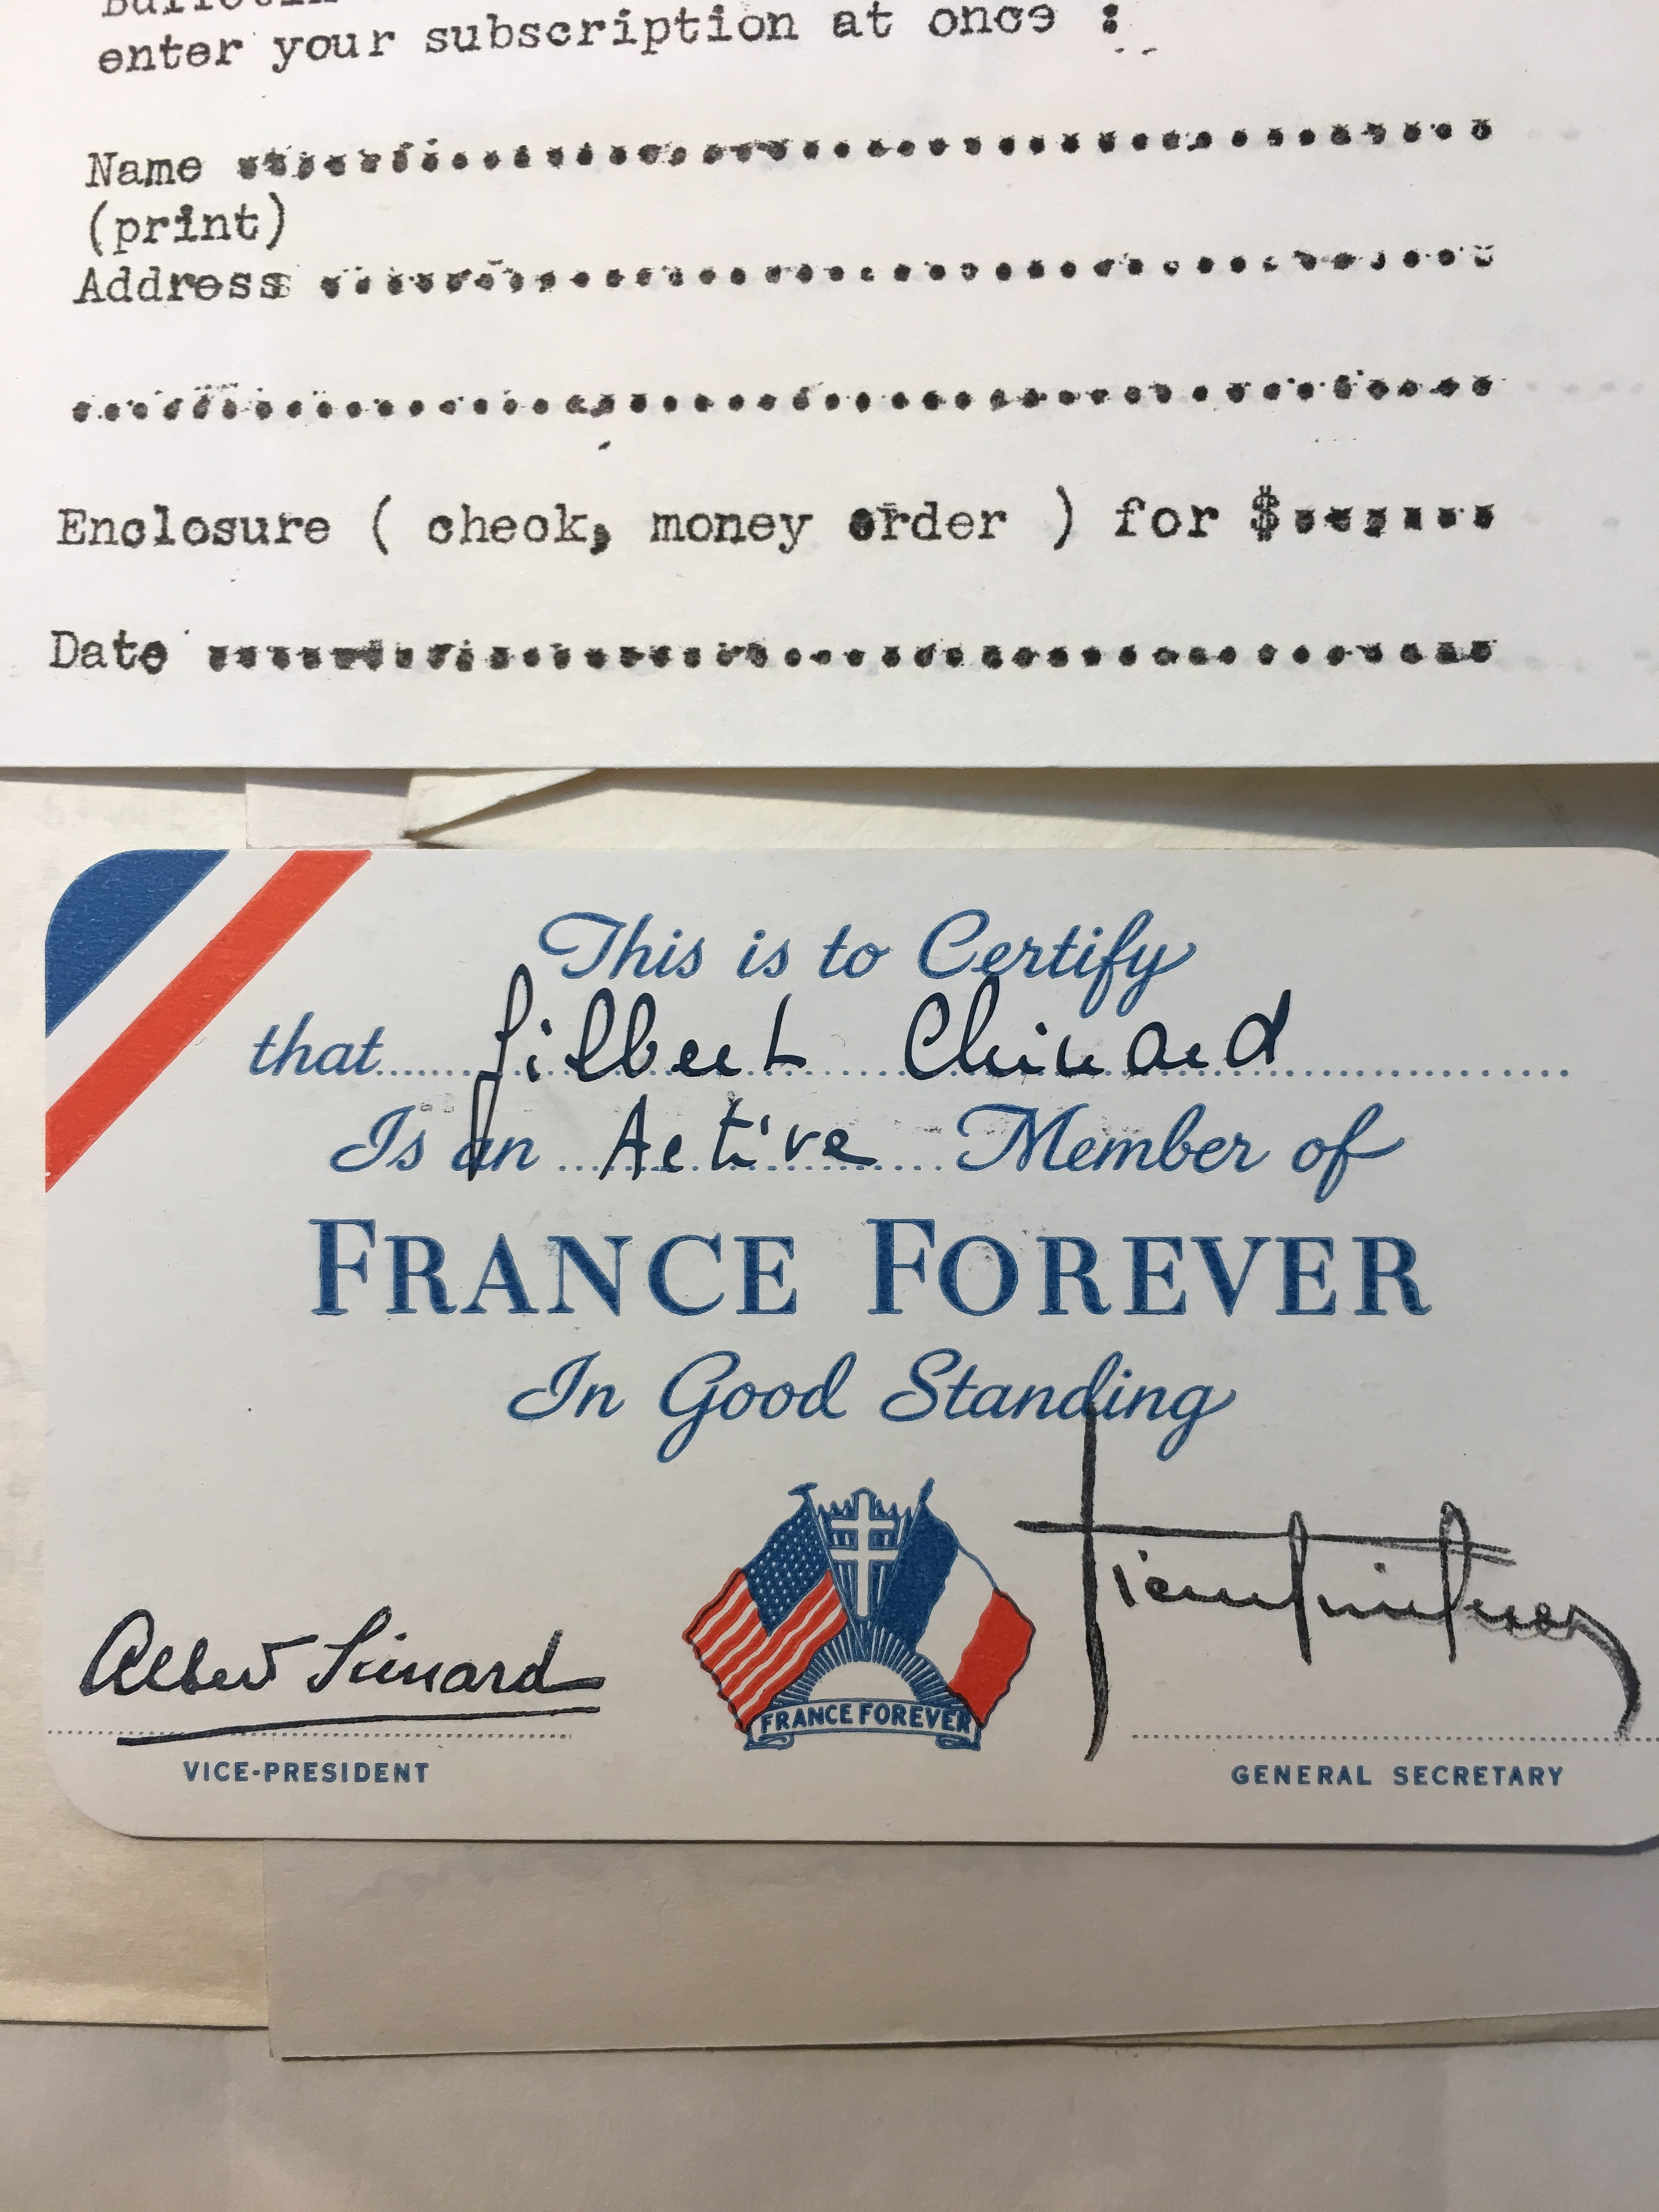 Bernard piece, France Forever membership card